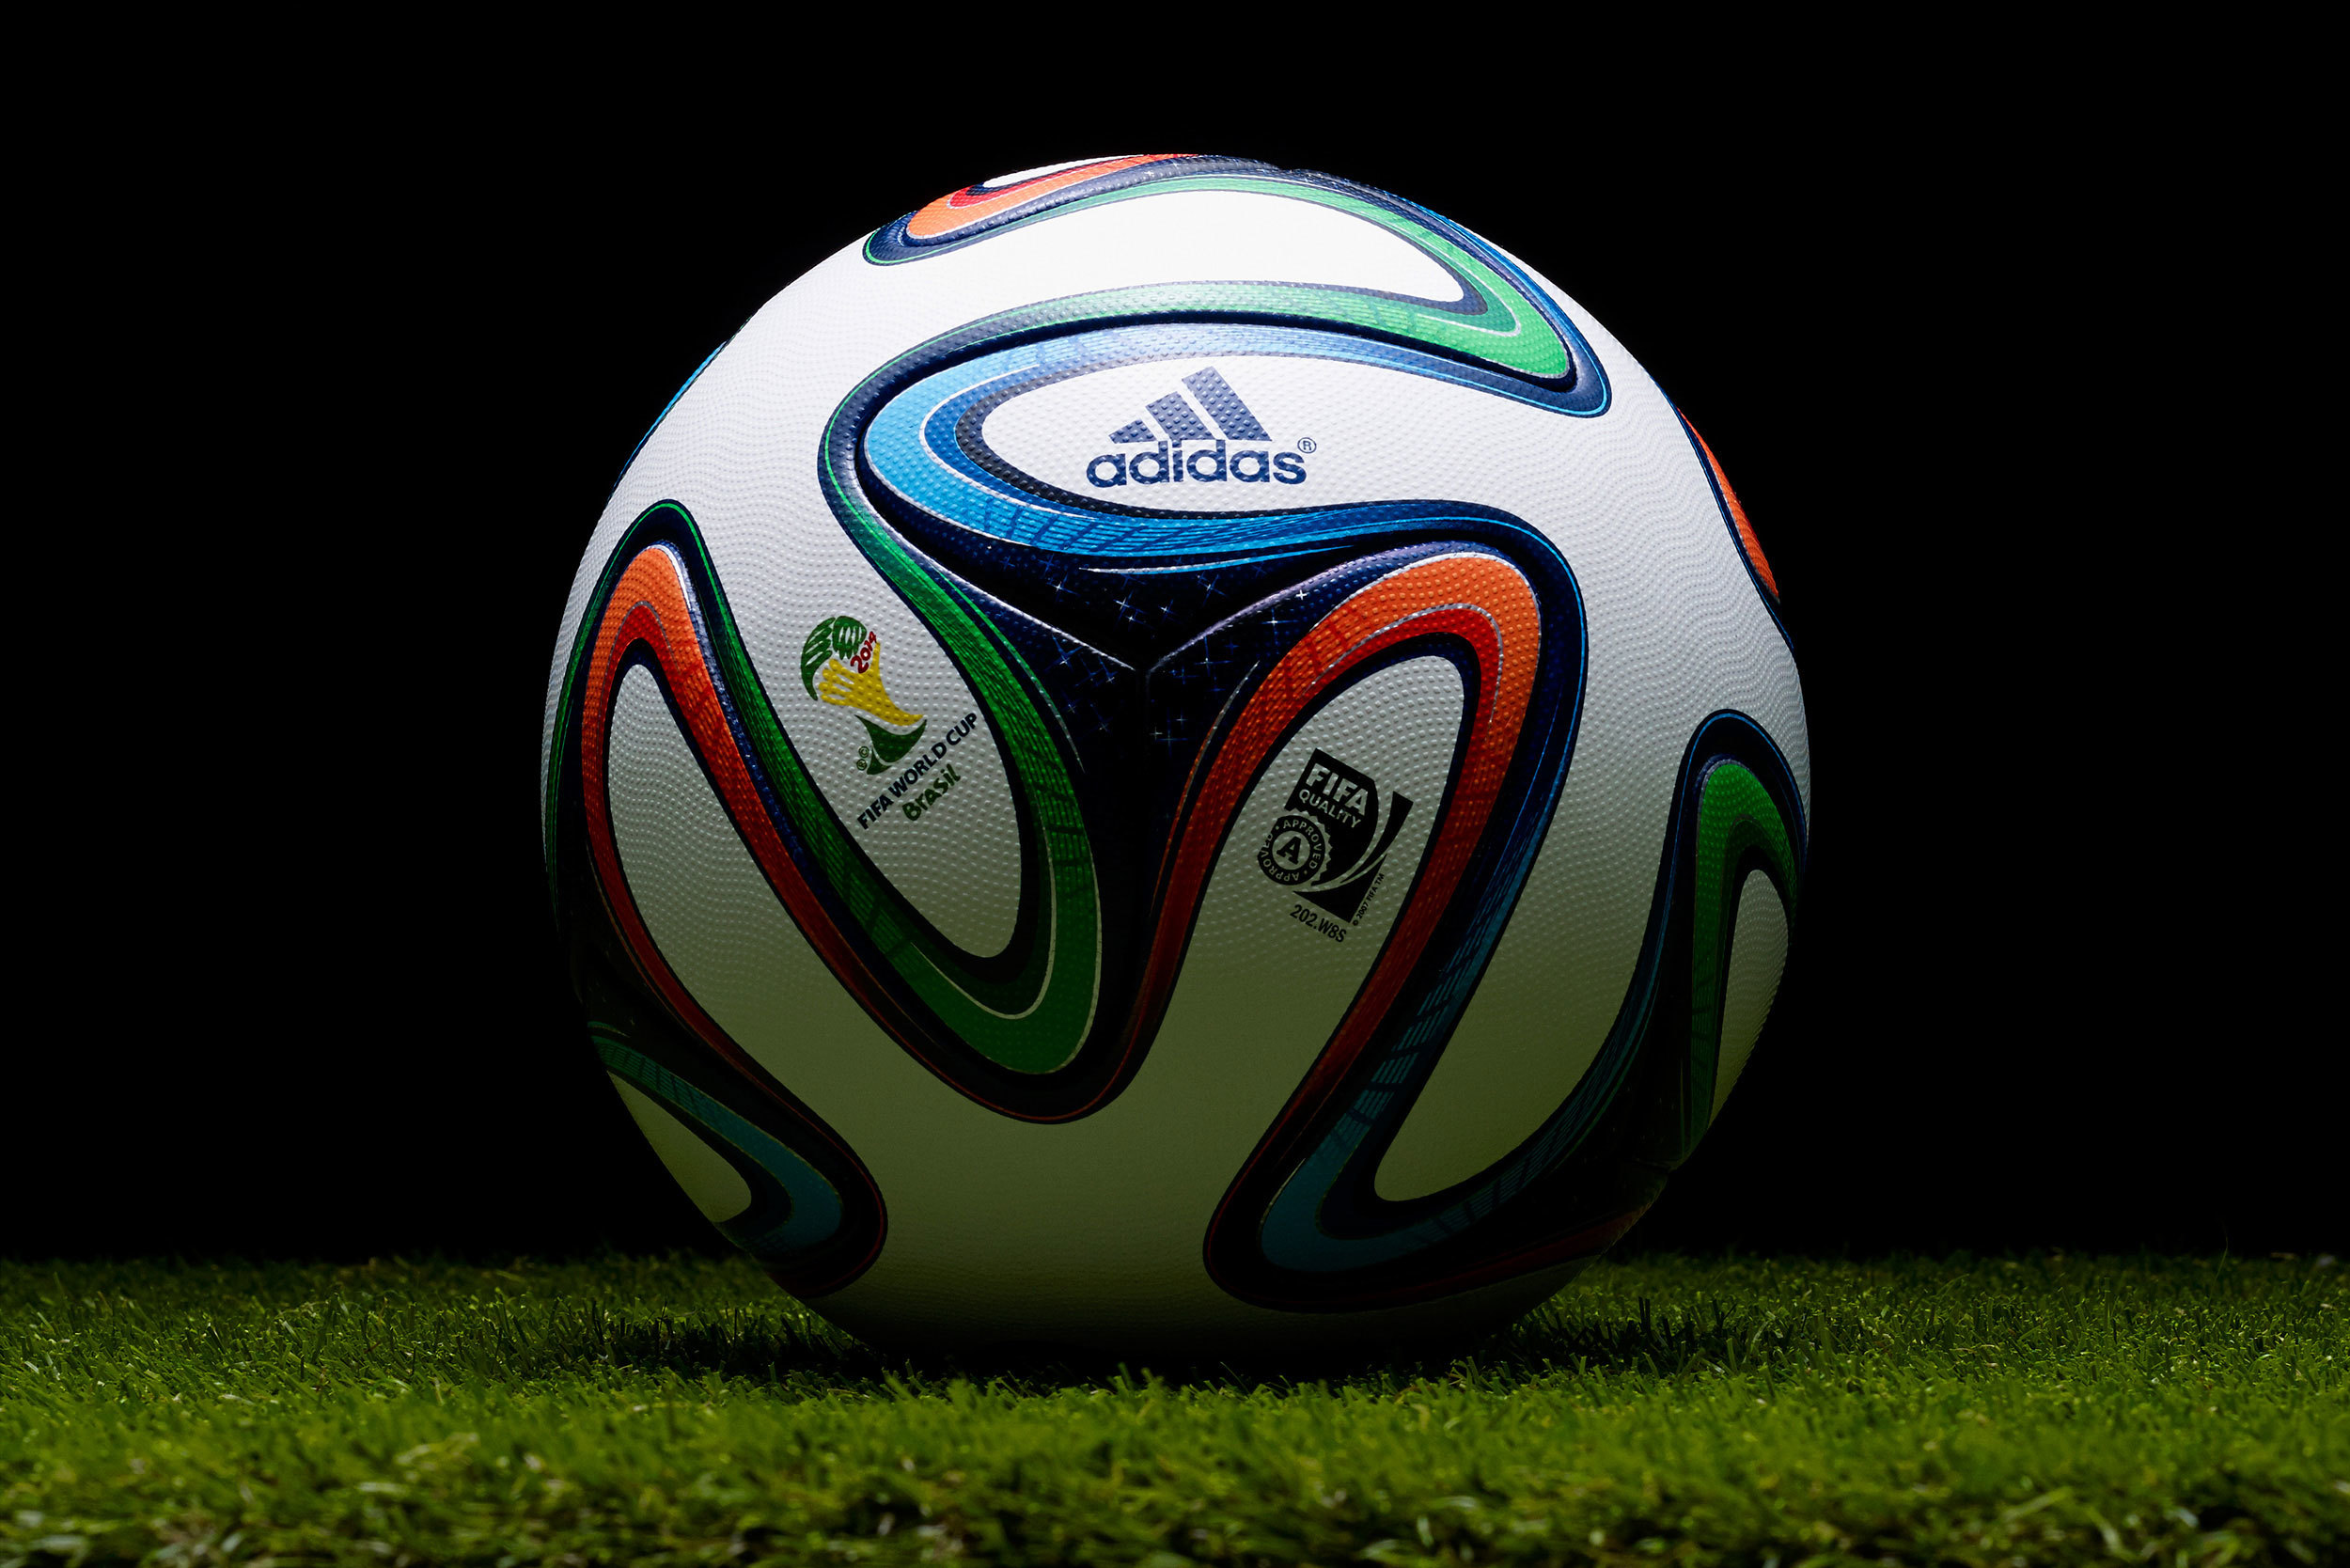 adidas, football, sports, 2014, ball, world cup, brazuca